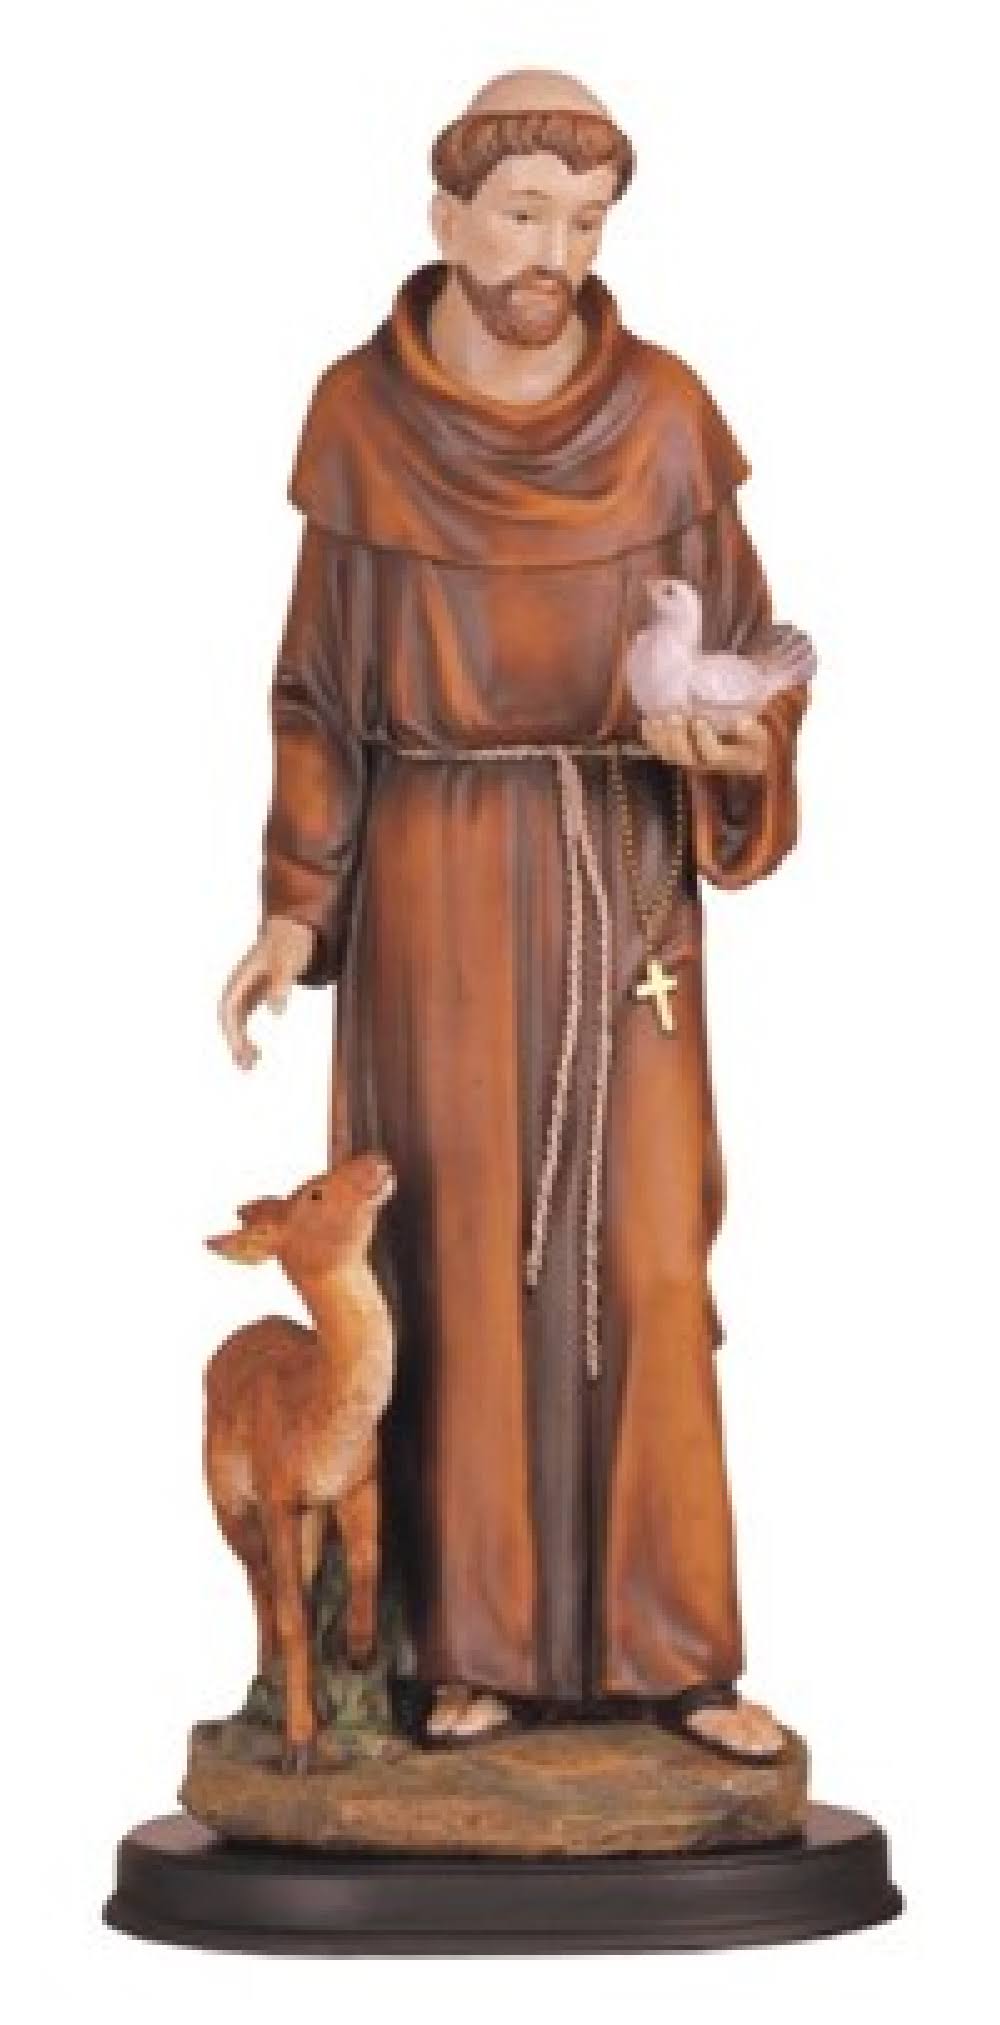 George S. Chen Imports Saint Francis Holy Figurine Religious Decoration Statue Decor - 5"